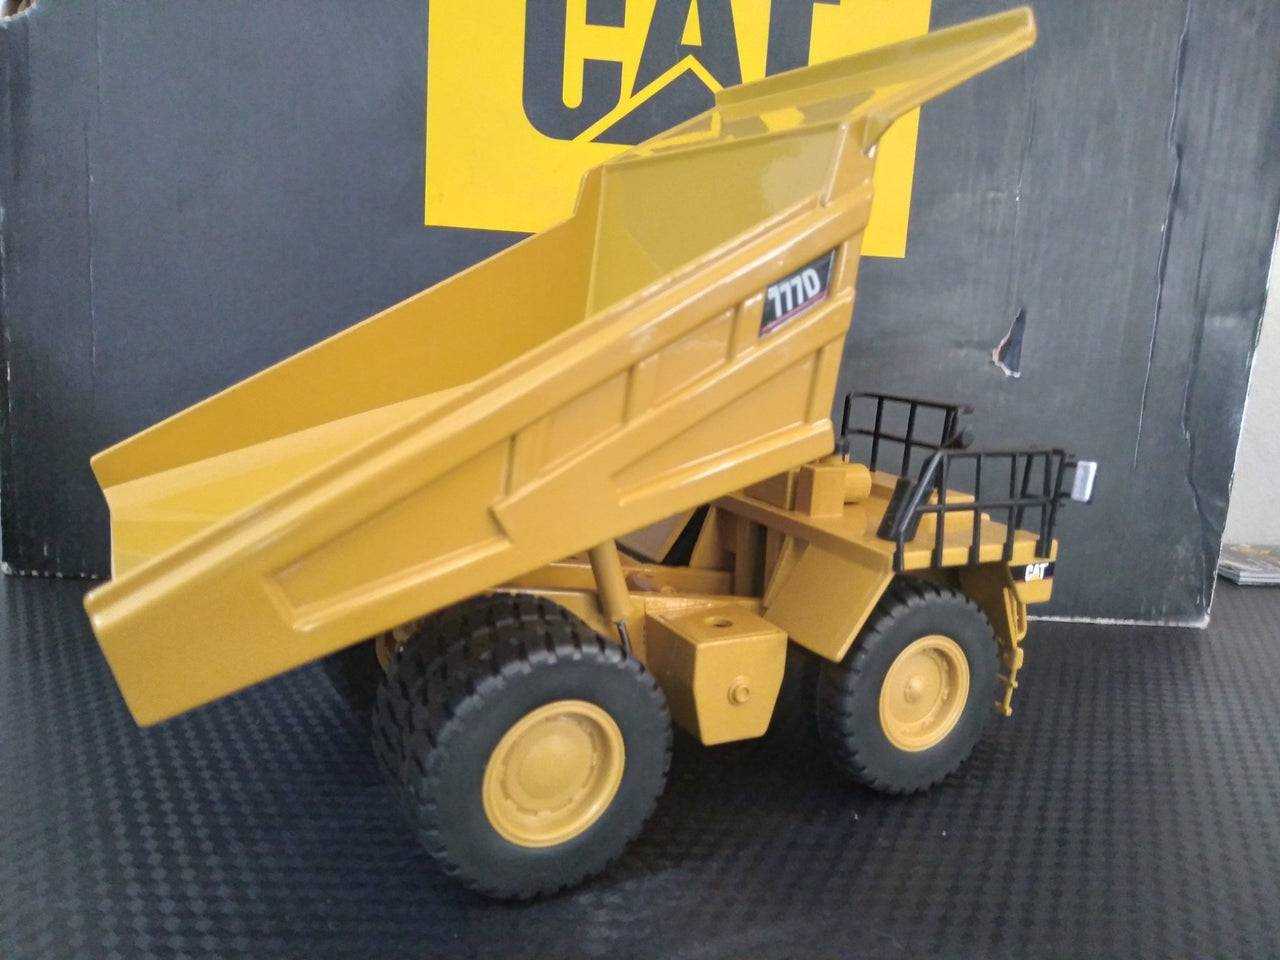 85104C Caterpillar 777D Mining Truck 1:50 Scale